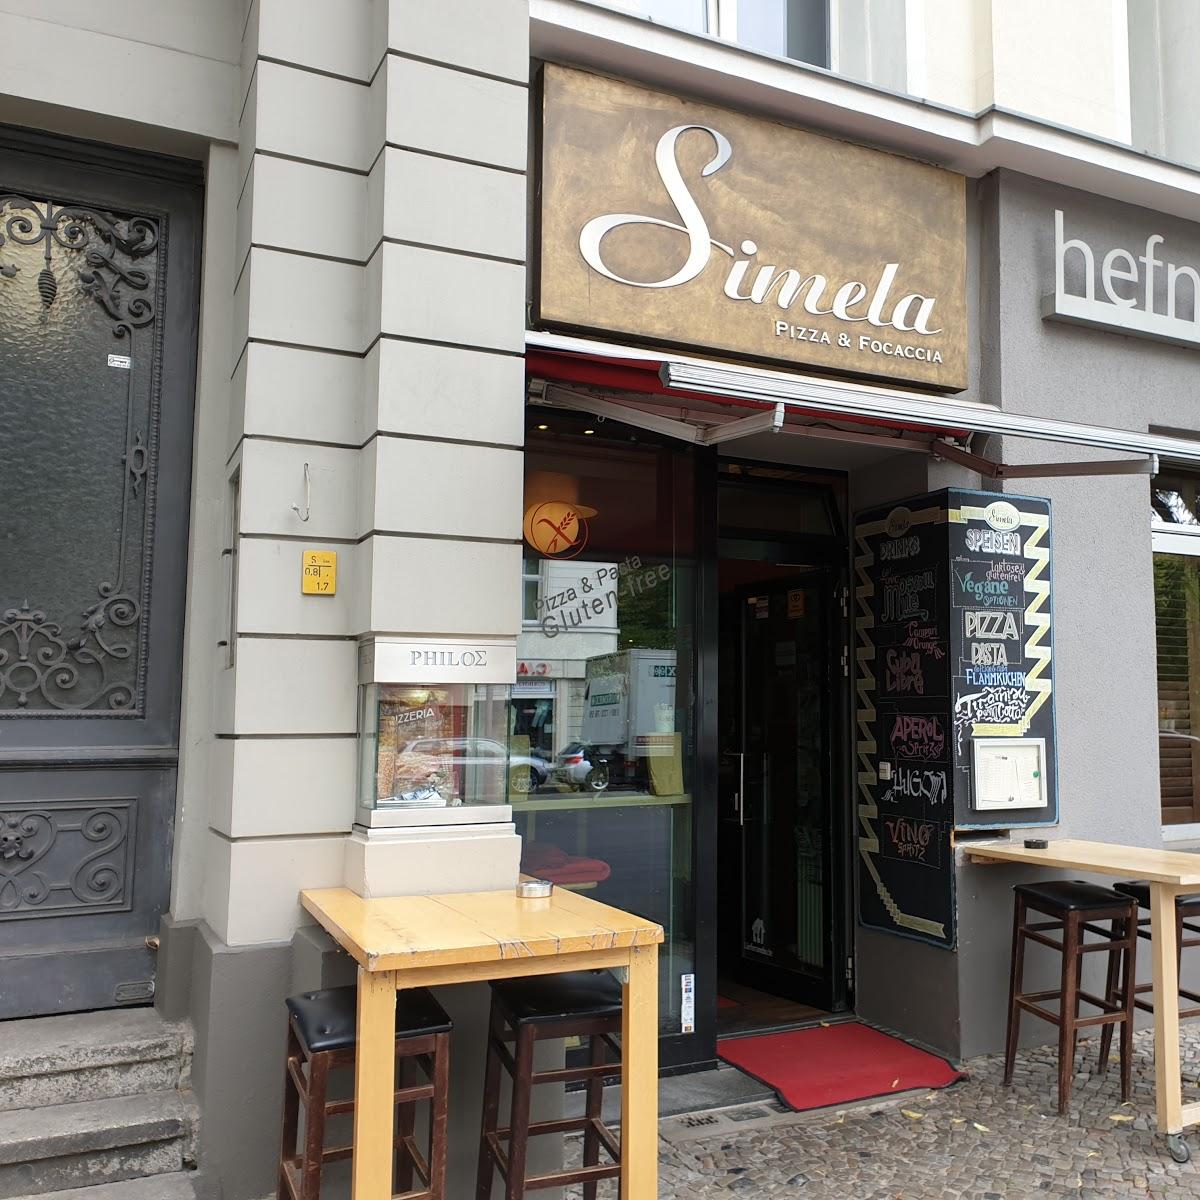 Restaurant "Simela finest food" in Berlin